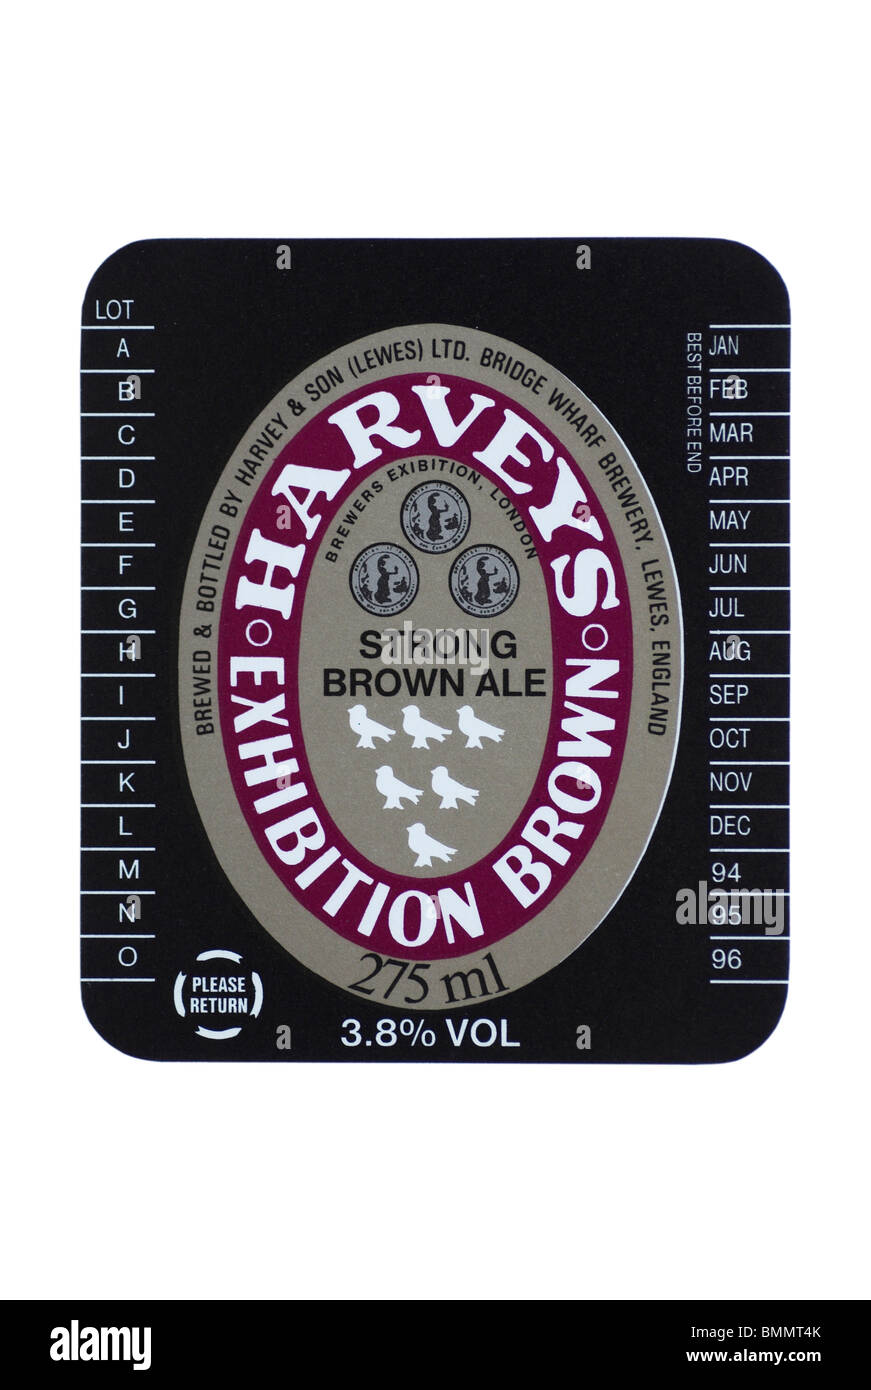 Harveys Exhibition Brown Ale Bottled Beer label - label circa 1994 - 1996. Stock Photo